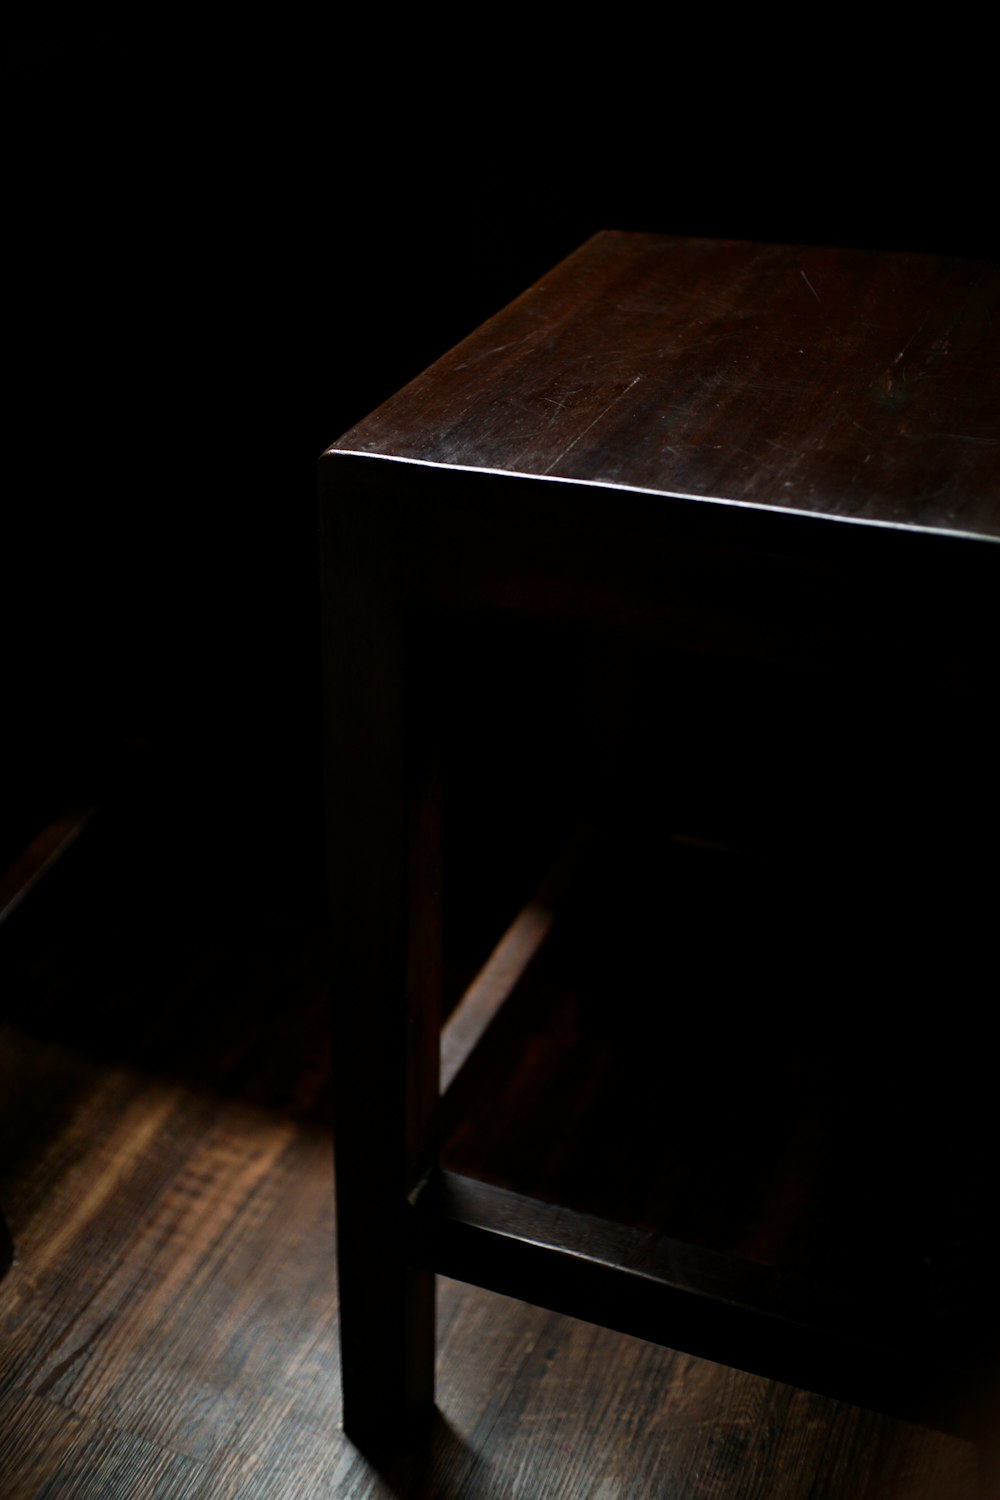 brown wooden table on brown wooden floor